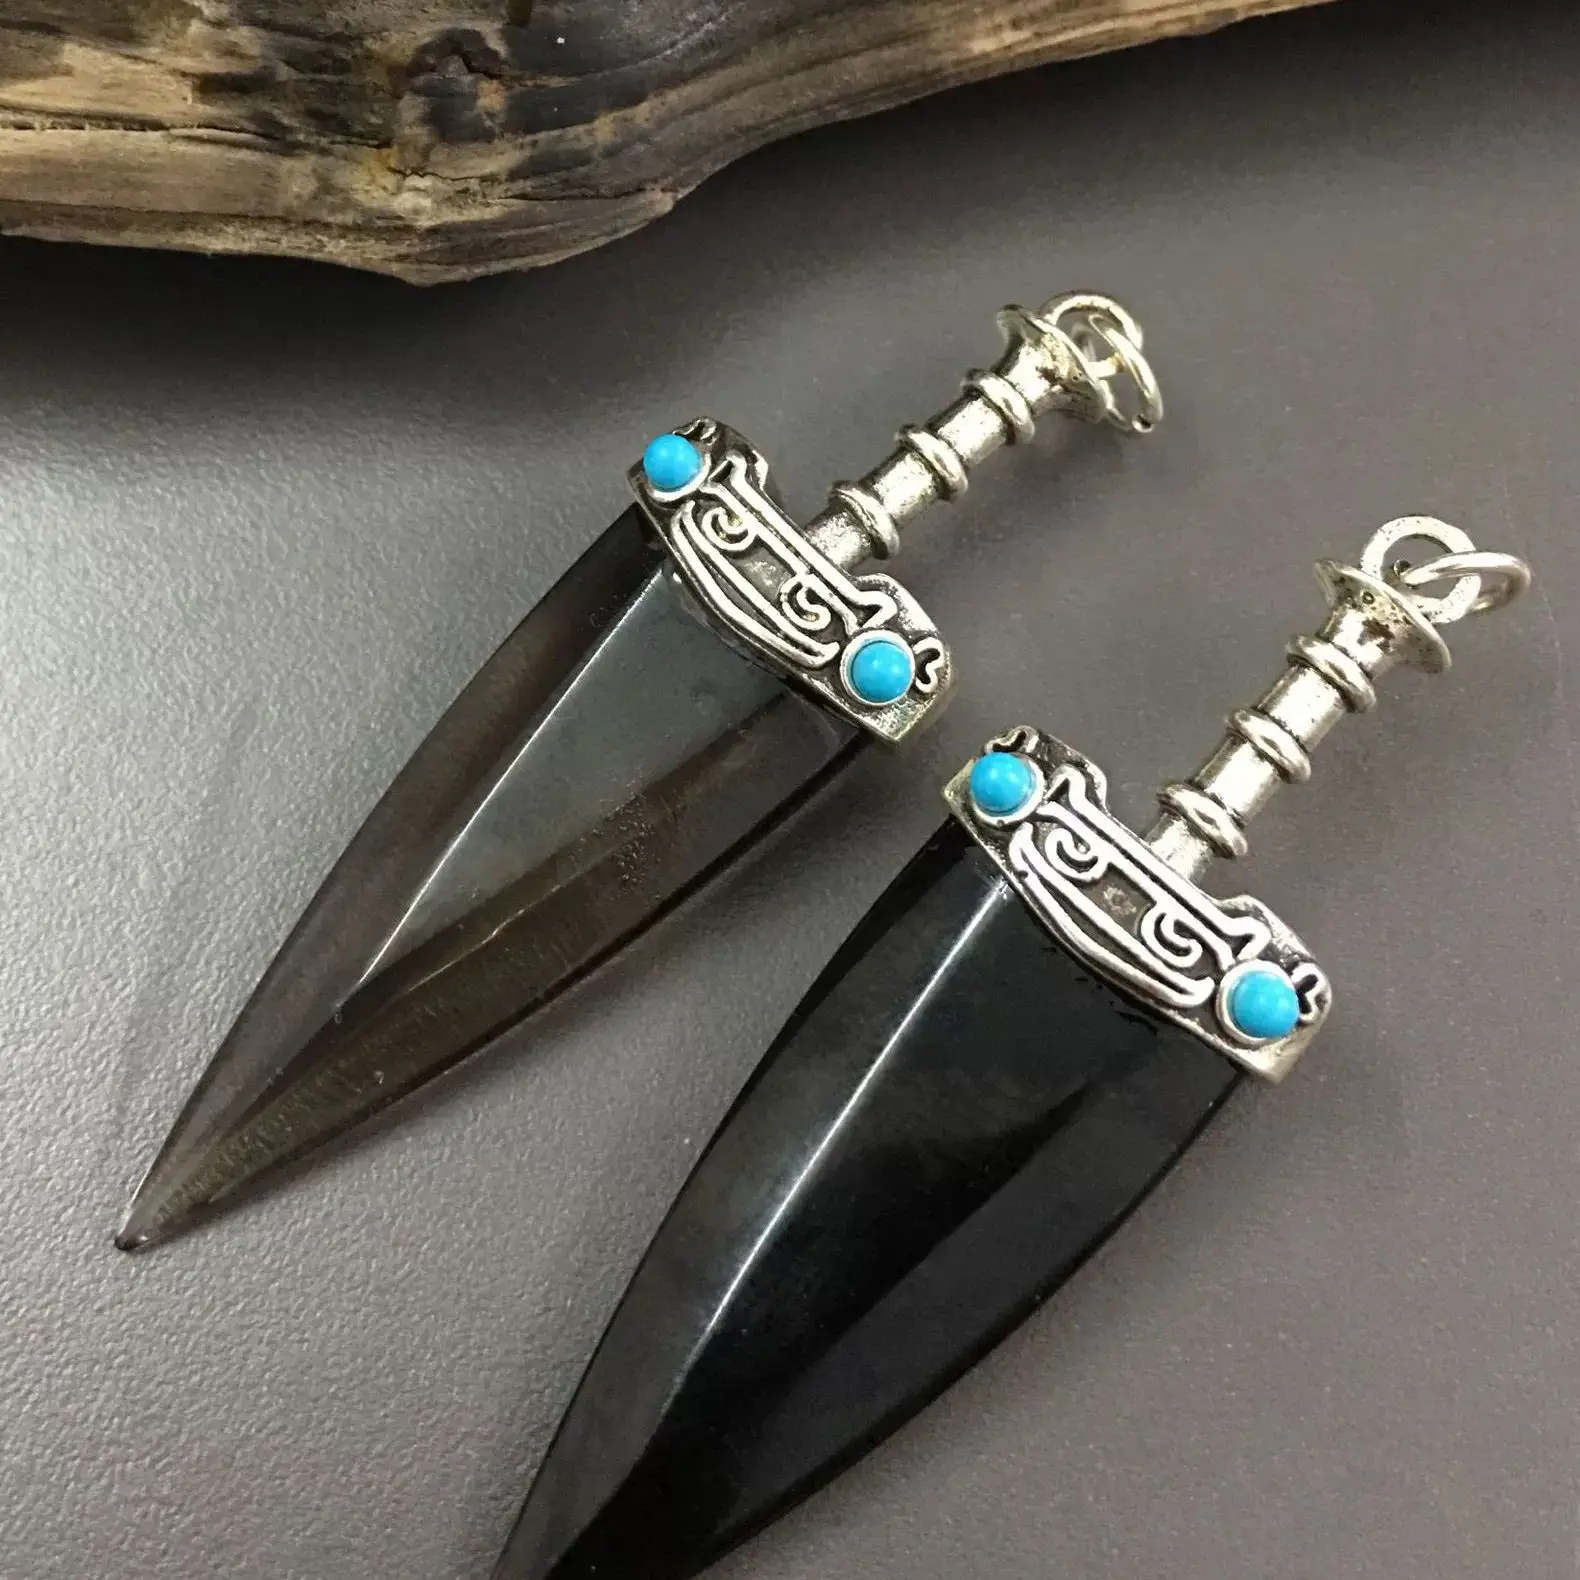 Dagger de cristal de cuarzo Natural tallado a mano, cuchillo de obsidiana, artesanías, COLLAR COLGANTE curativa para piedra de cristal, regalos, 50-60mm